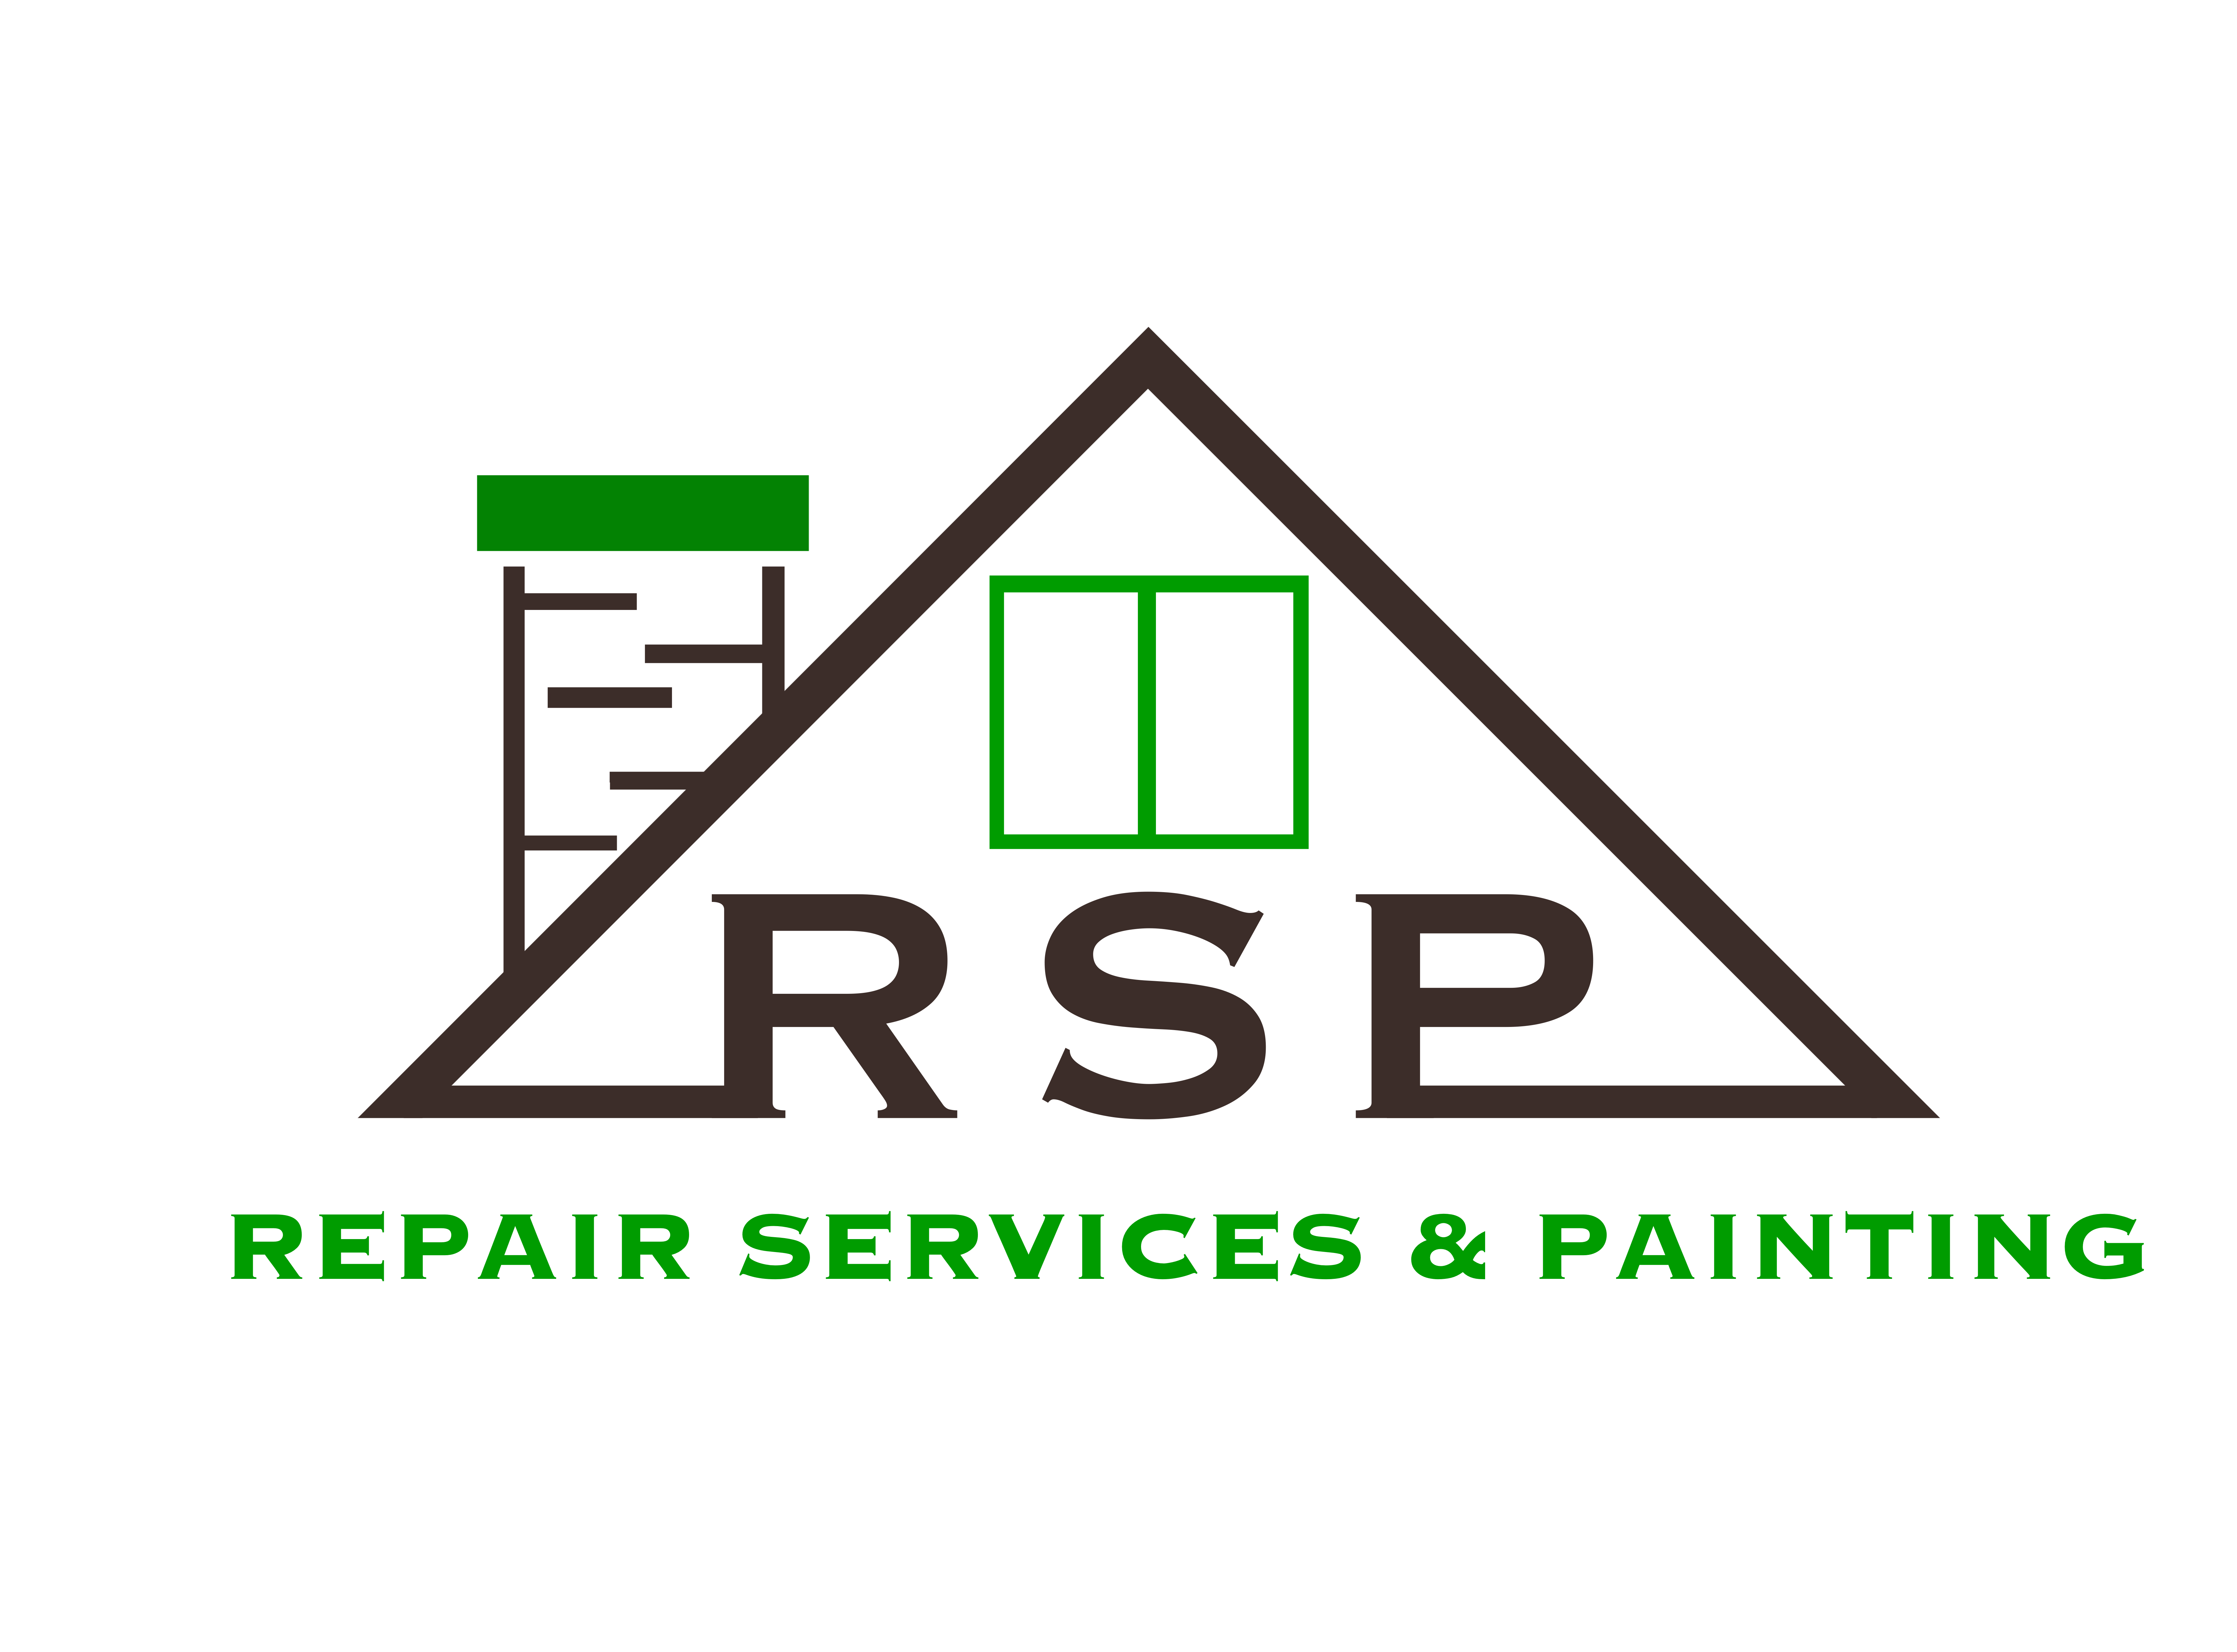 Repair Services & Painting, Inc. Logo